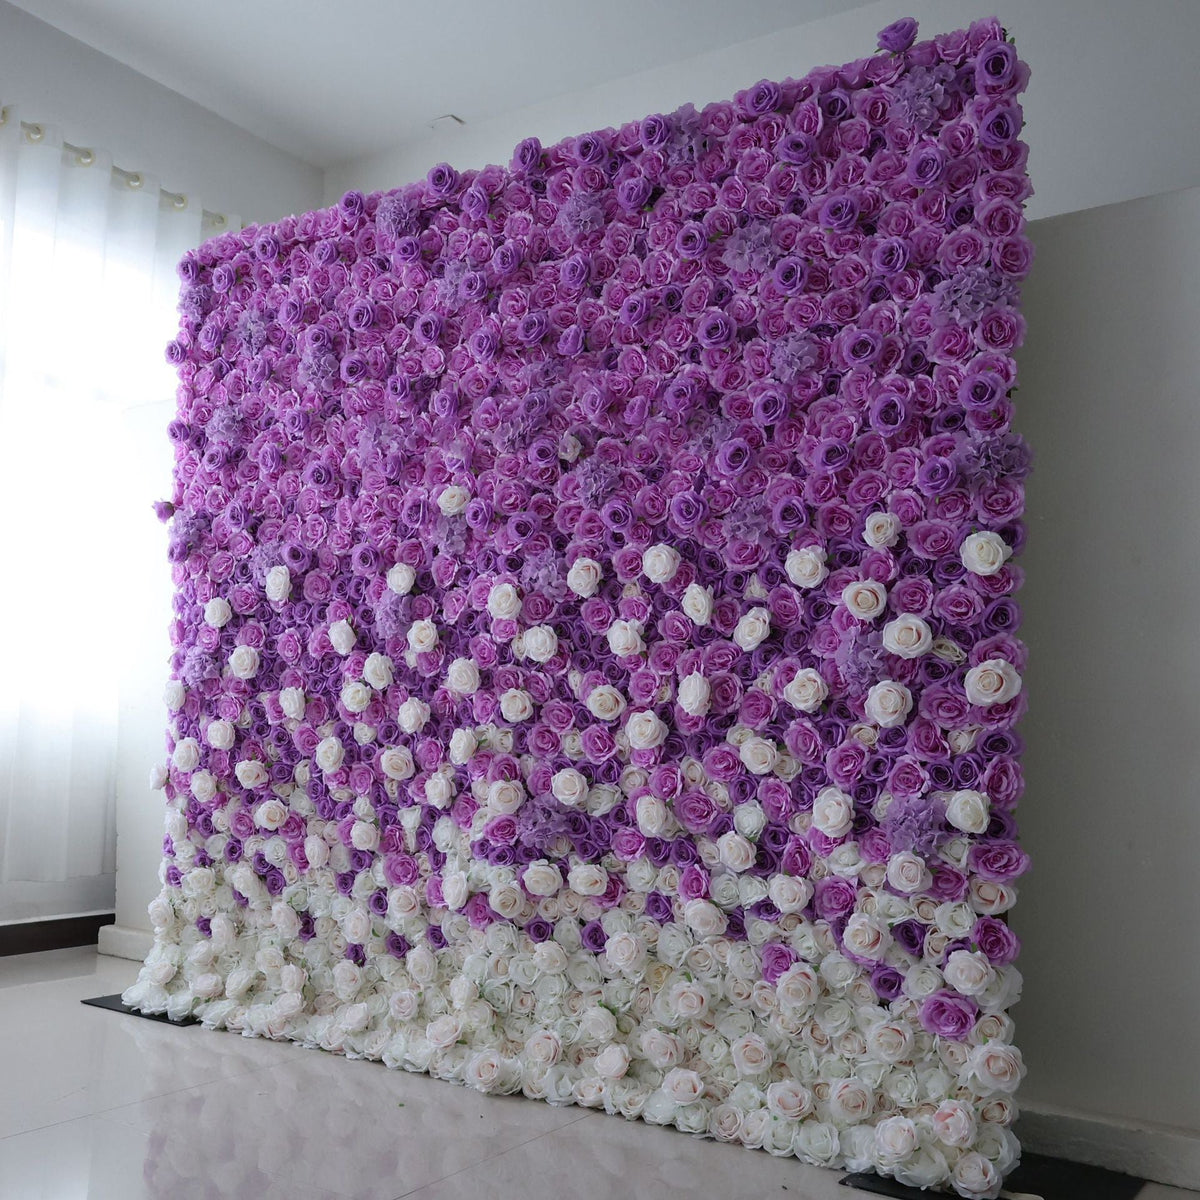 3D Artificial Flower Wall Arrangement Wedding Party Birthday Backdrop Decor HQ1314